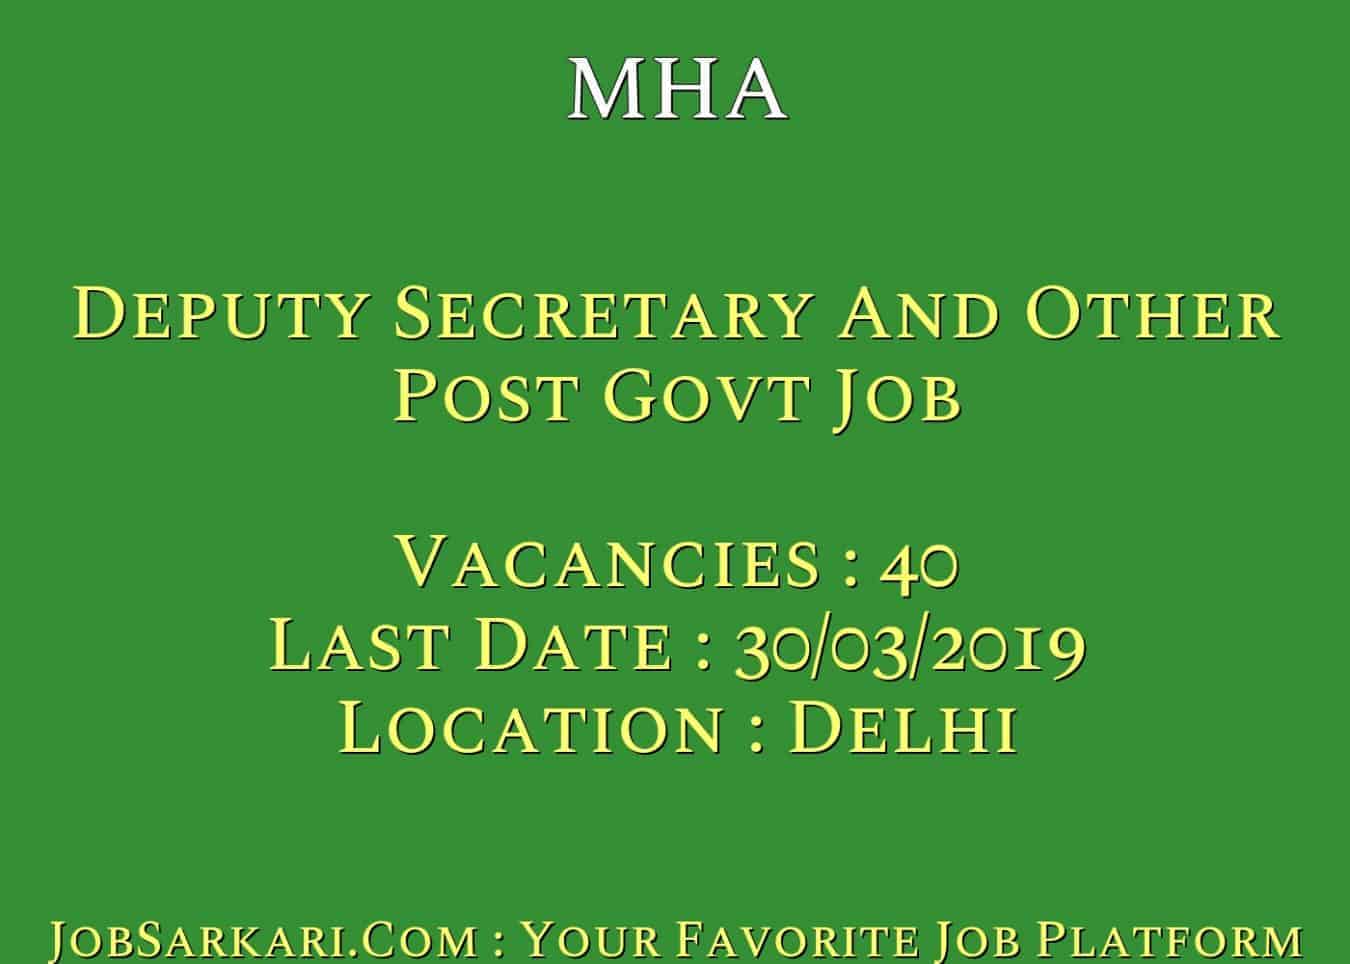 MHA Recruitment 2019 For Deputy Secretary And Other Post Govt Job